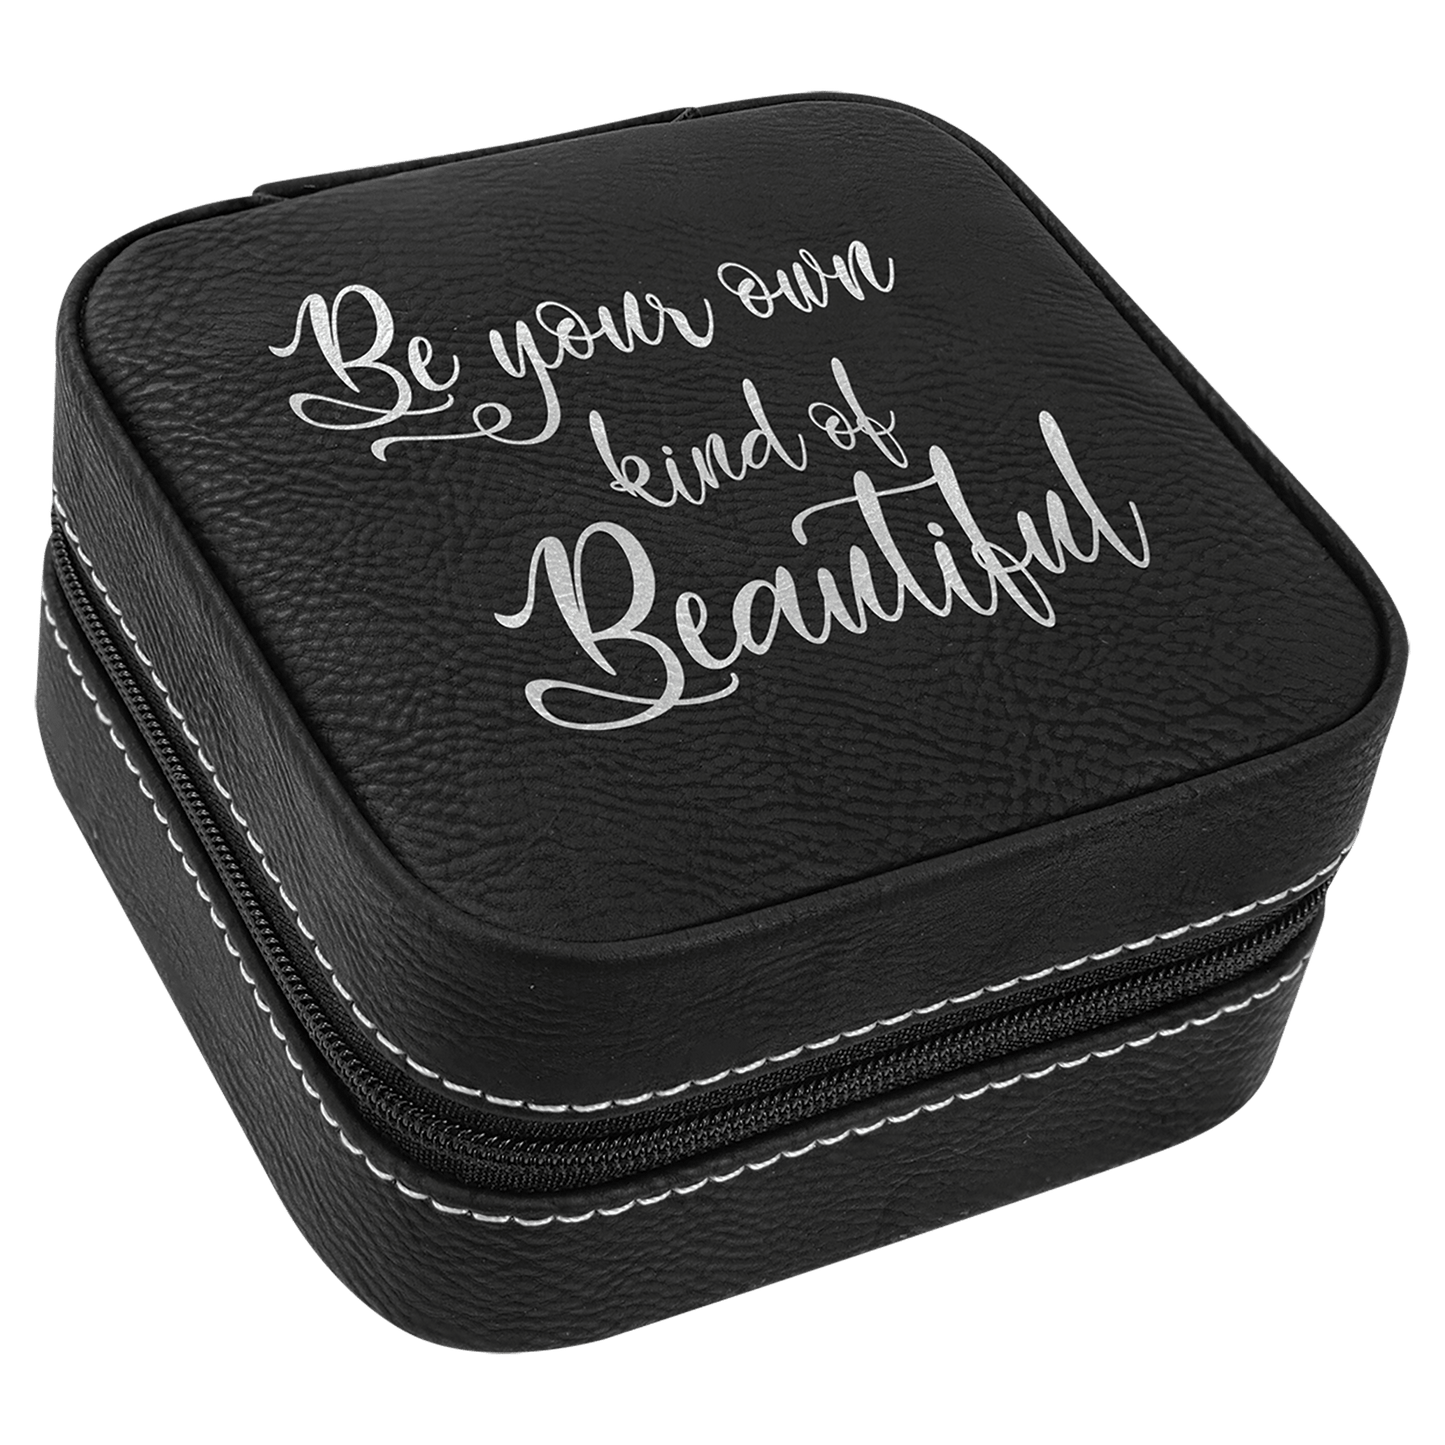 Leatherette Travel Jewelry Box